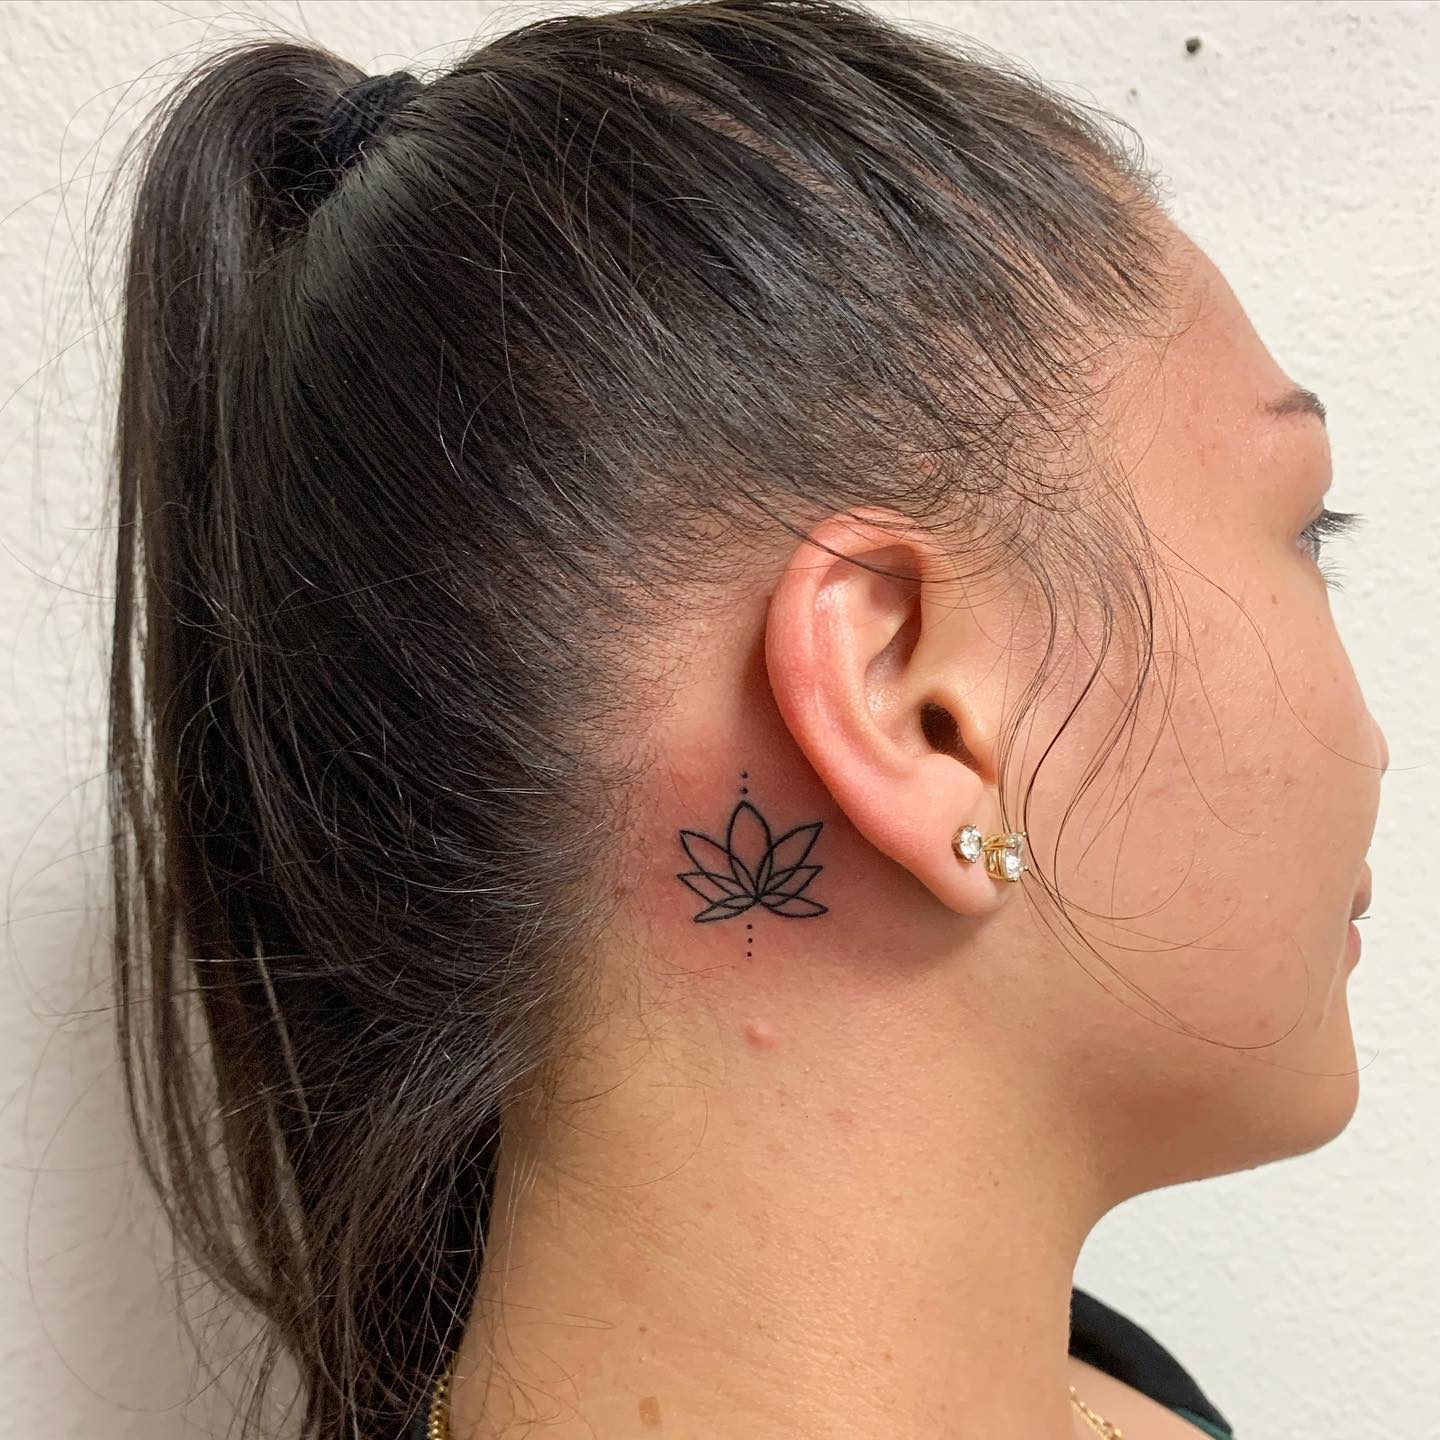 Linework Lotus Behind The Ear Tattoo